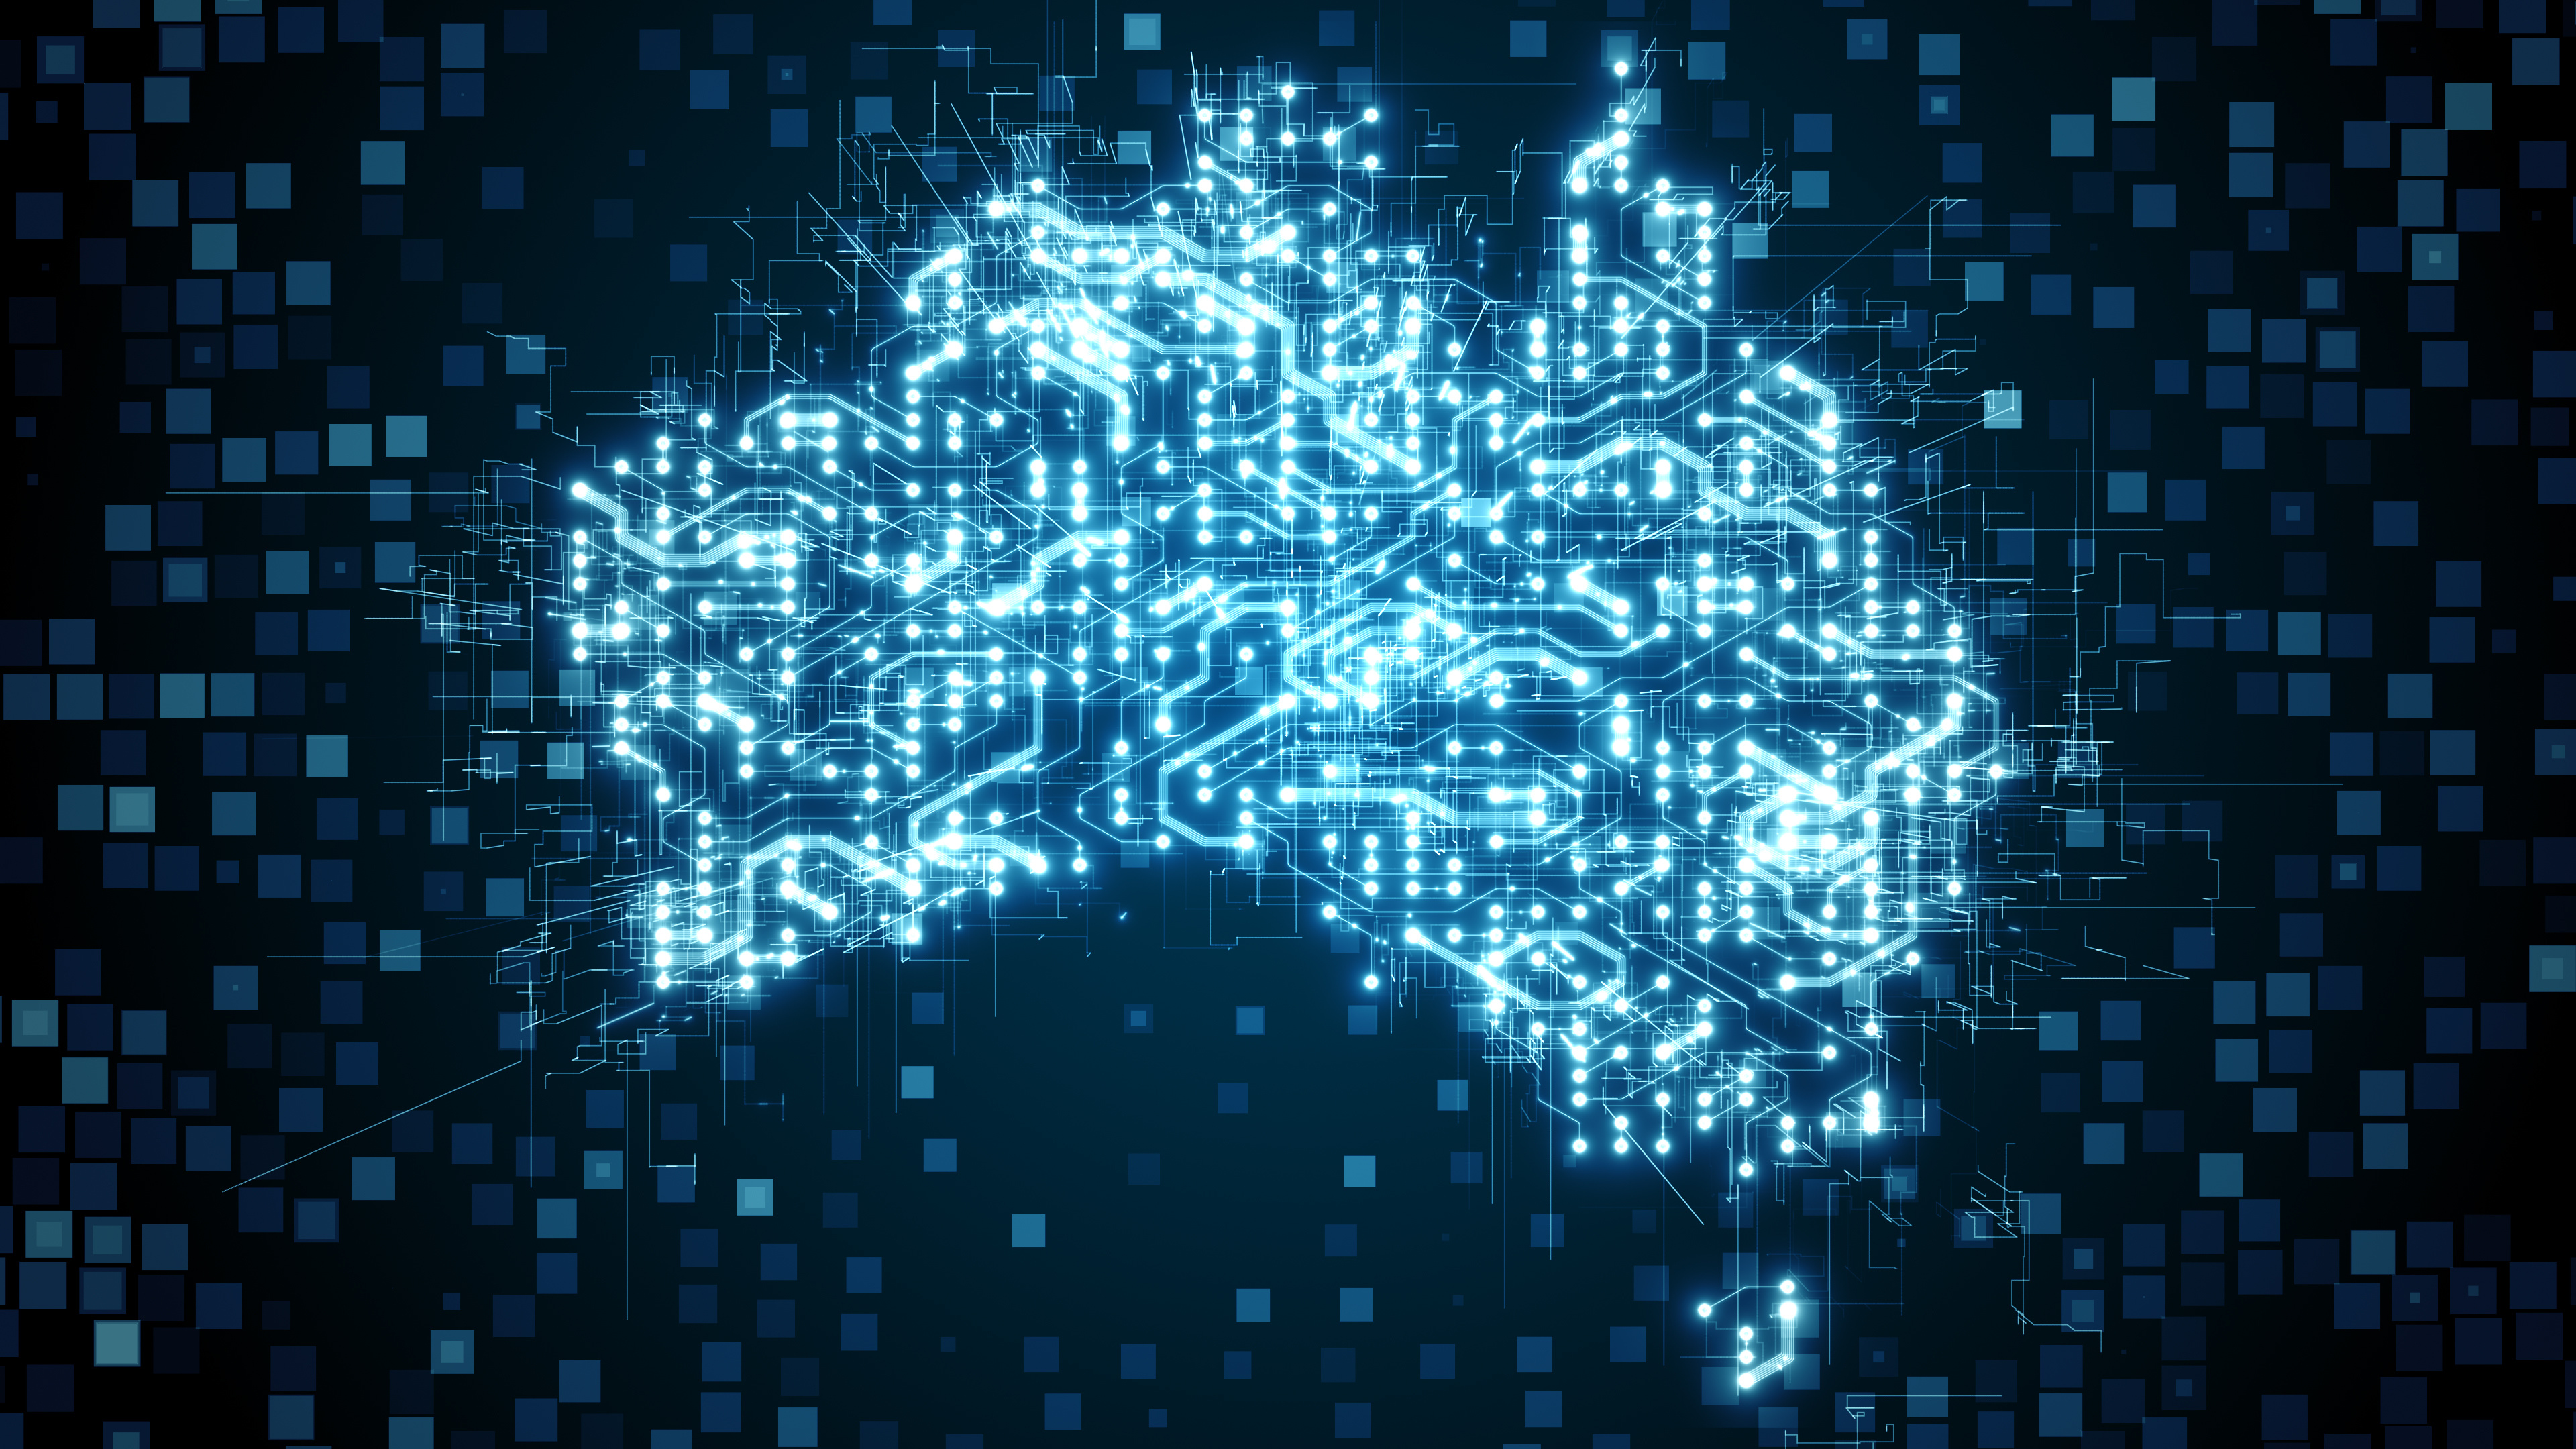 Australia circuit board broadband internet network infrastructure